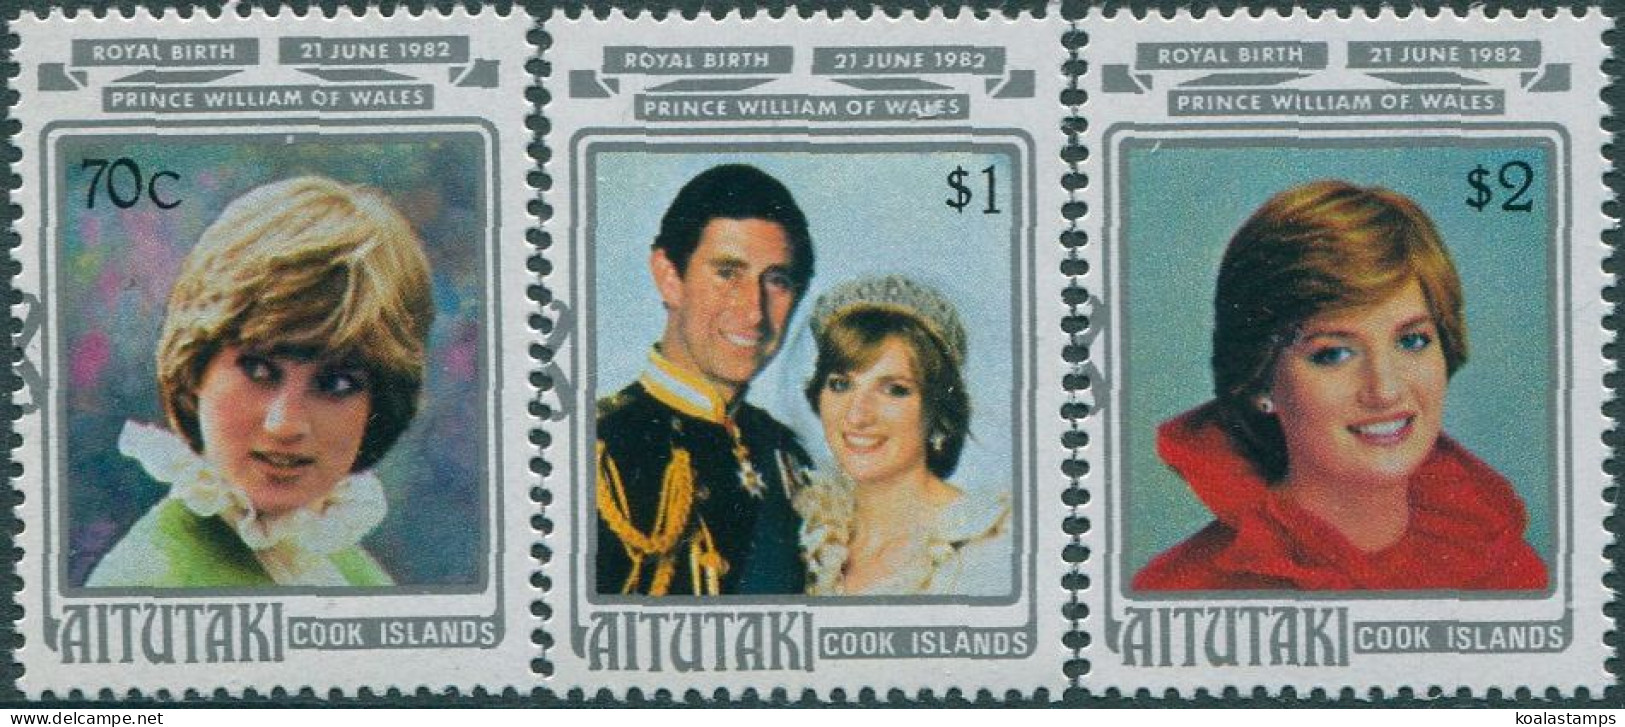 Aitutaki 1982 SG421-423 Prince William Birth Set MNH - Cookeilanden